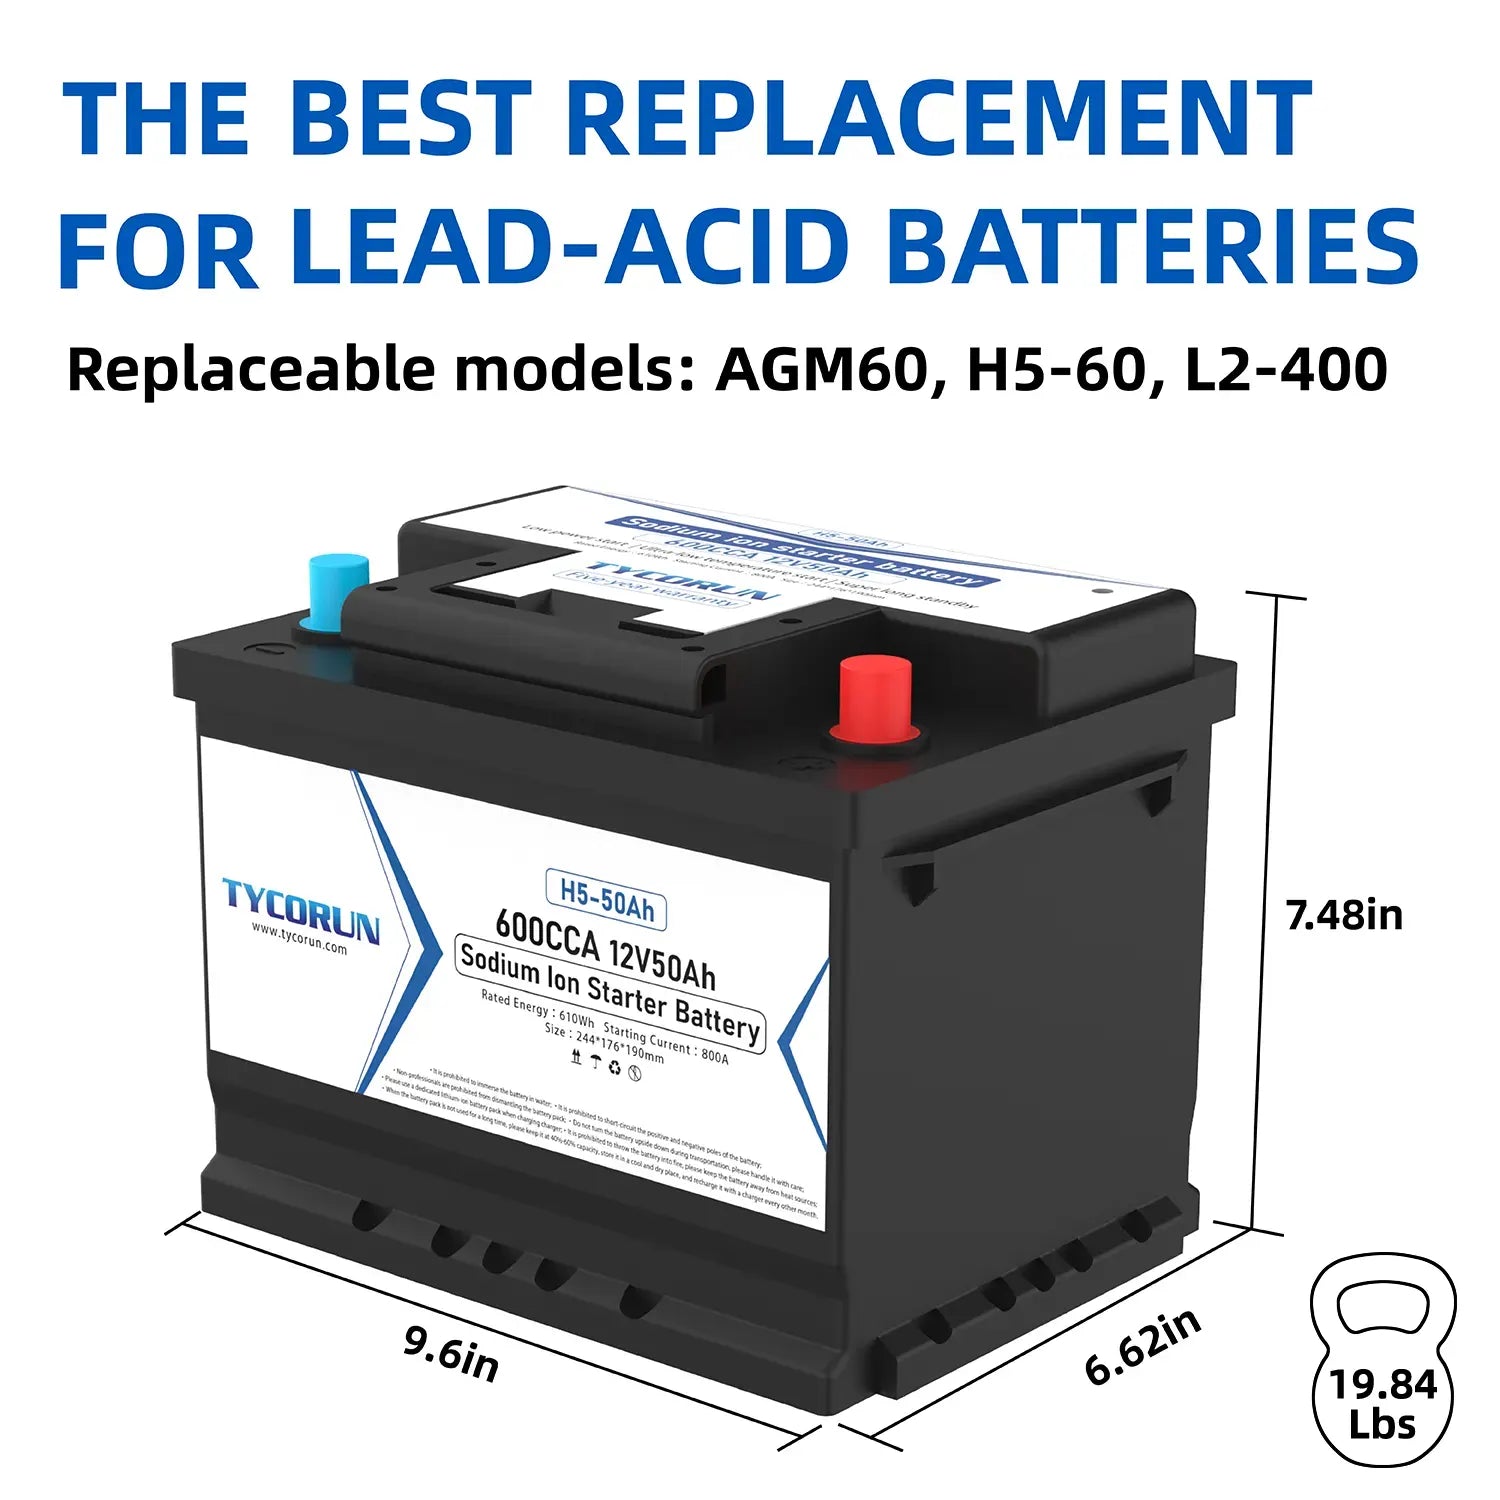 Cheap Sale Stop Start Car Batteries 12v 50AH 600CCA Sodium ion Battery Automotive Replacement Batteries